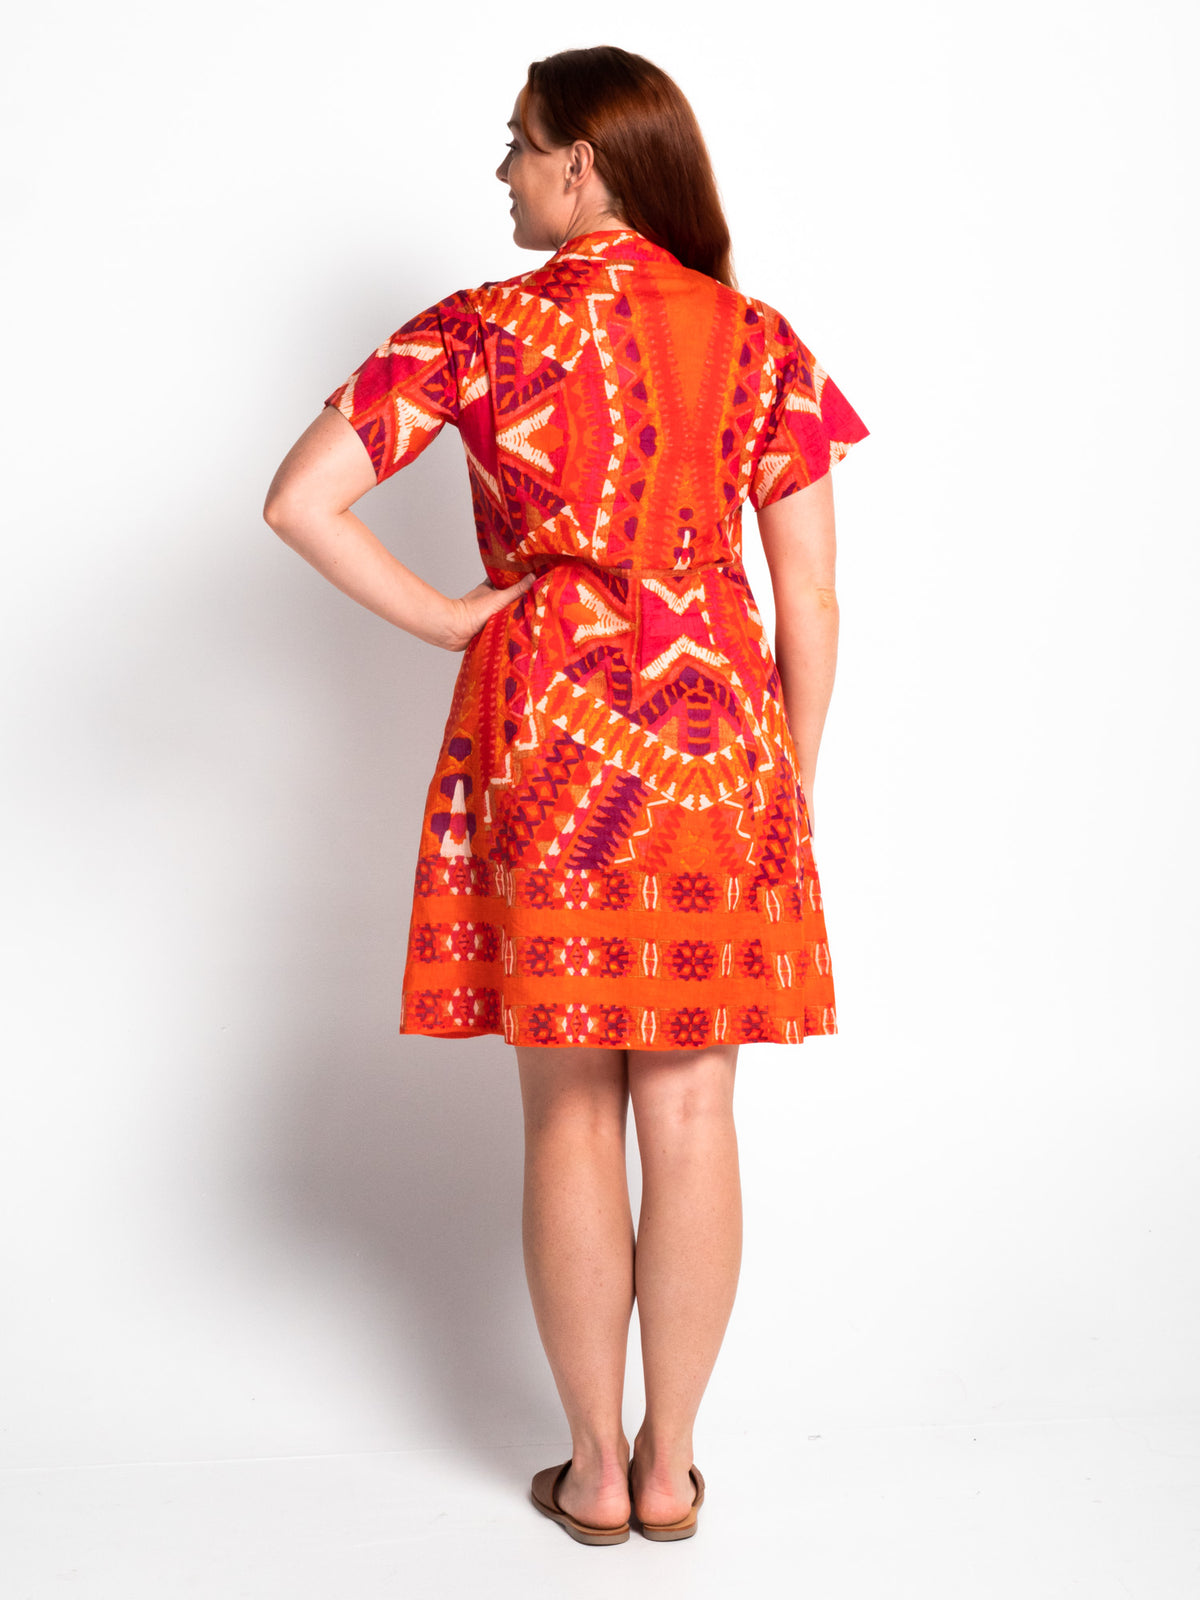 Mareeba Dress in Blood Orange